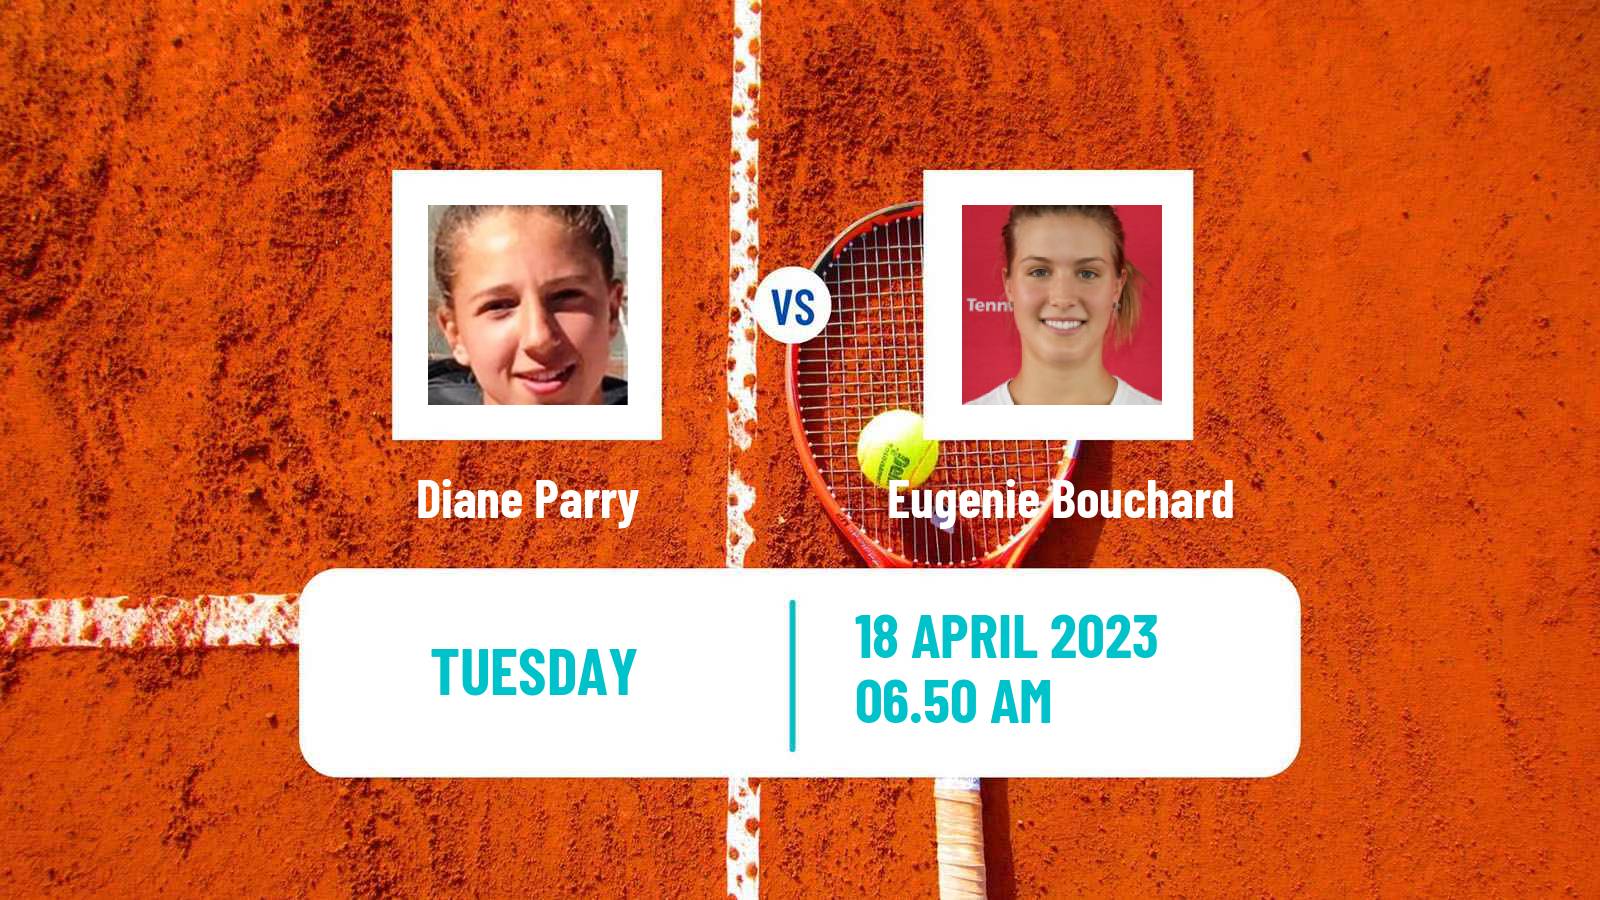 Tennis ITF Tournaments Diane Parry - Eugenie Bouchard